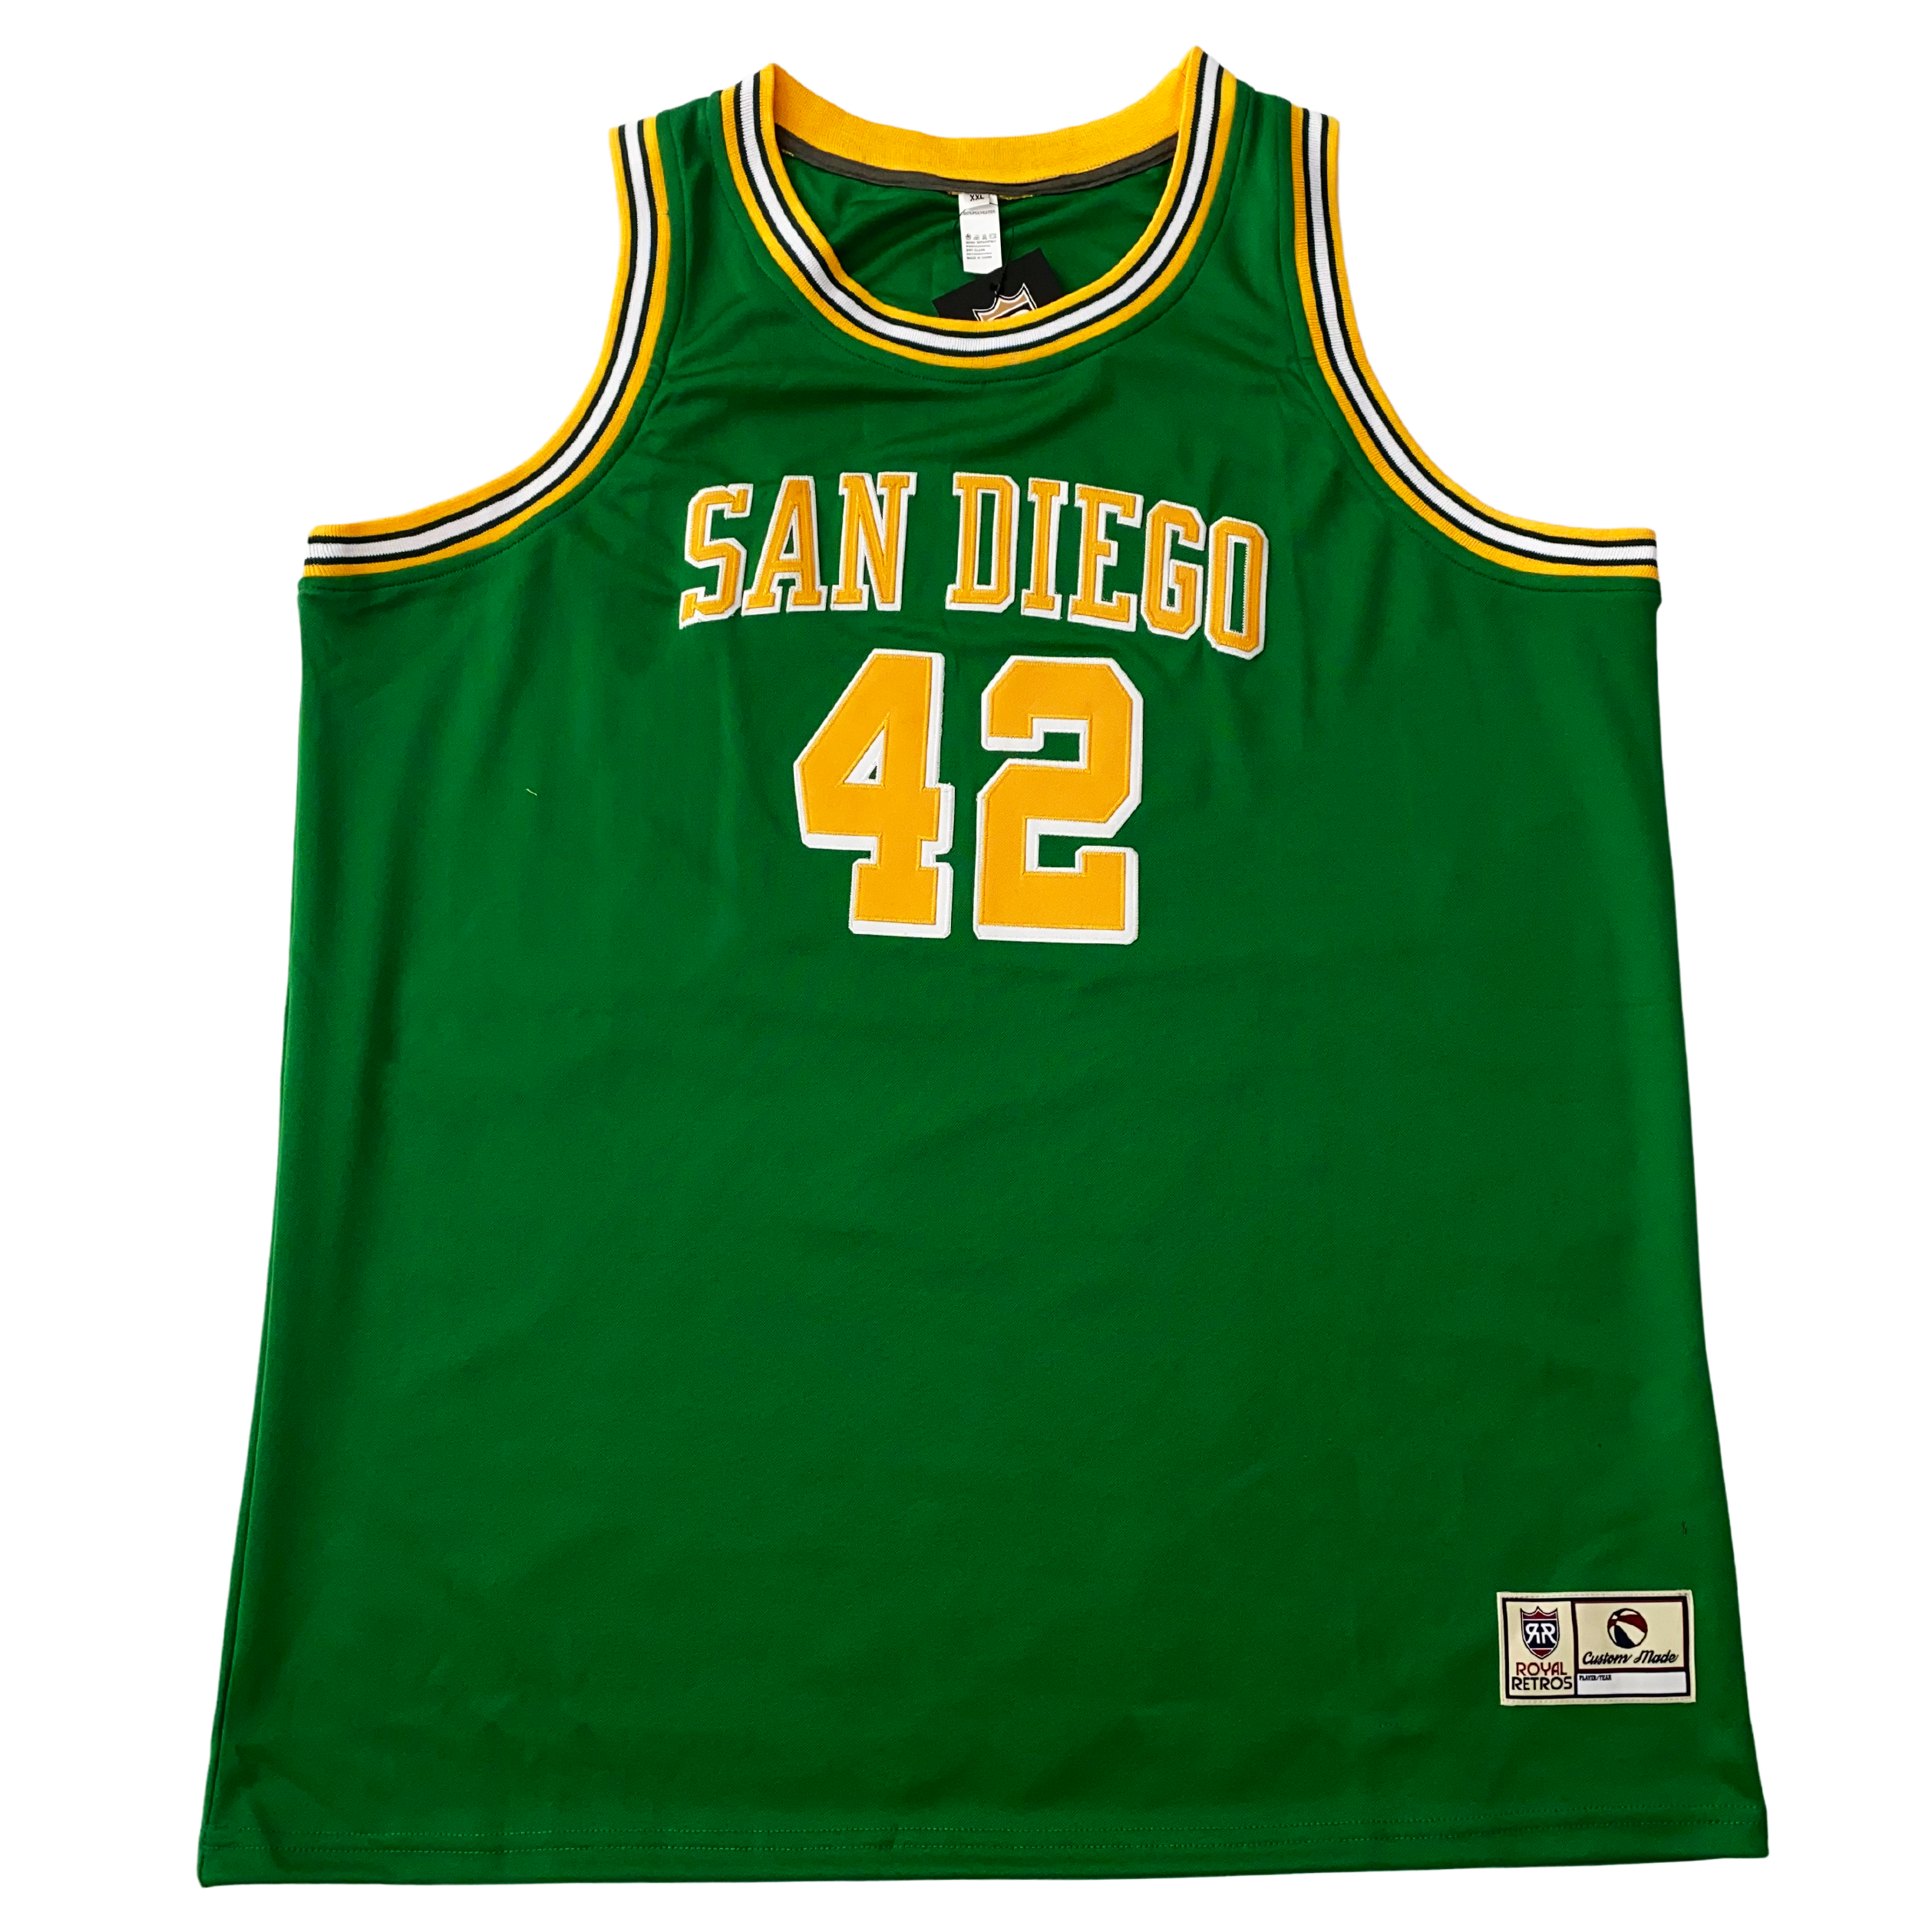 San Diego Green and Gold Basketball Jersey - 2XL - Royal Retros